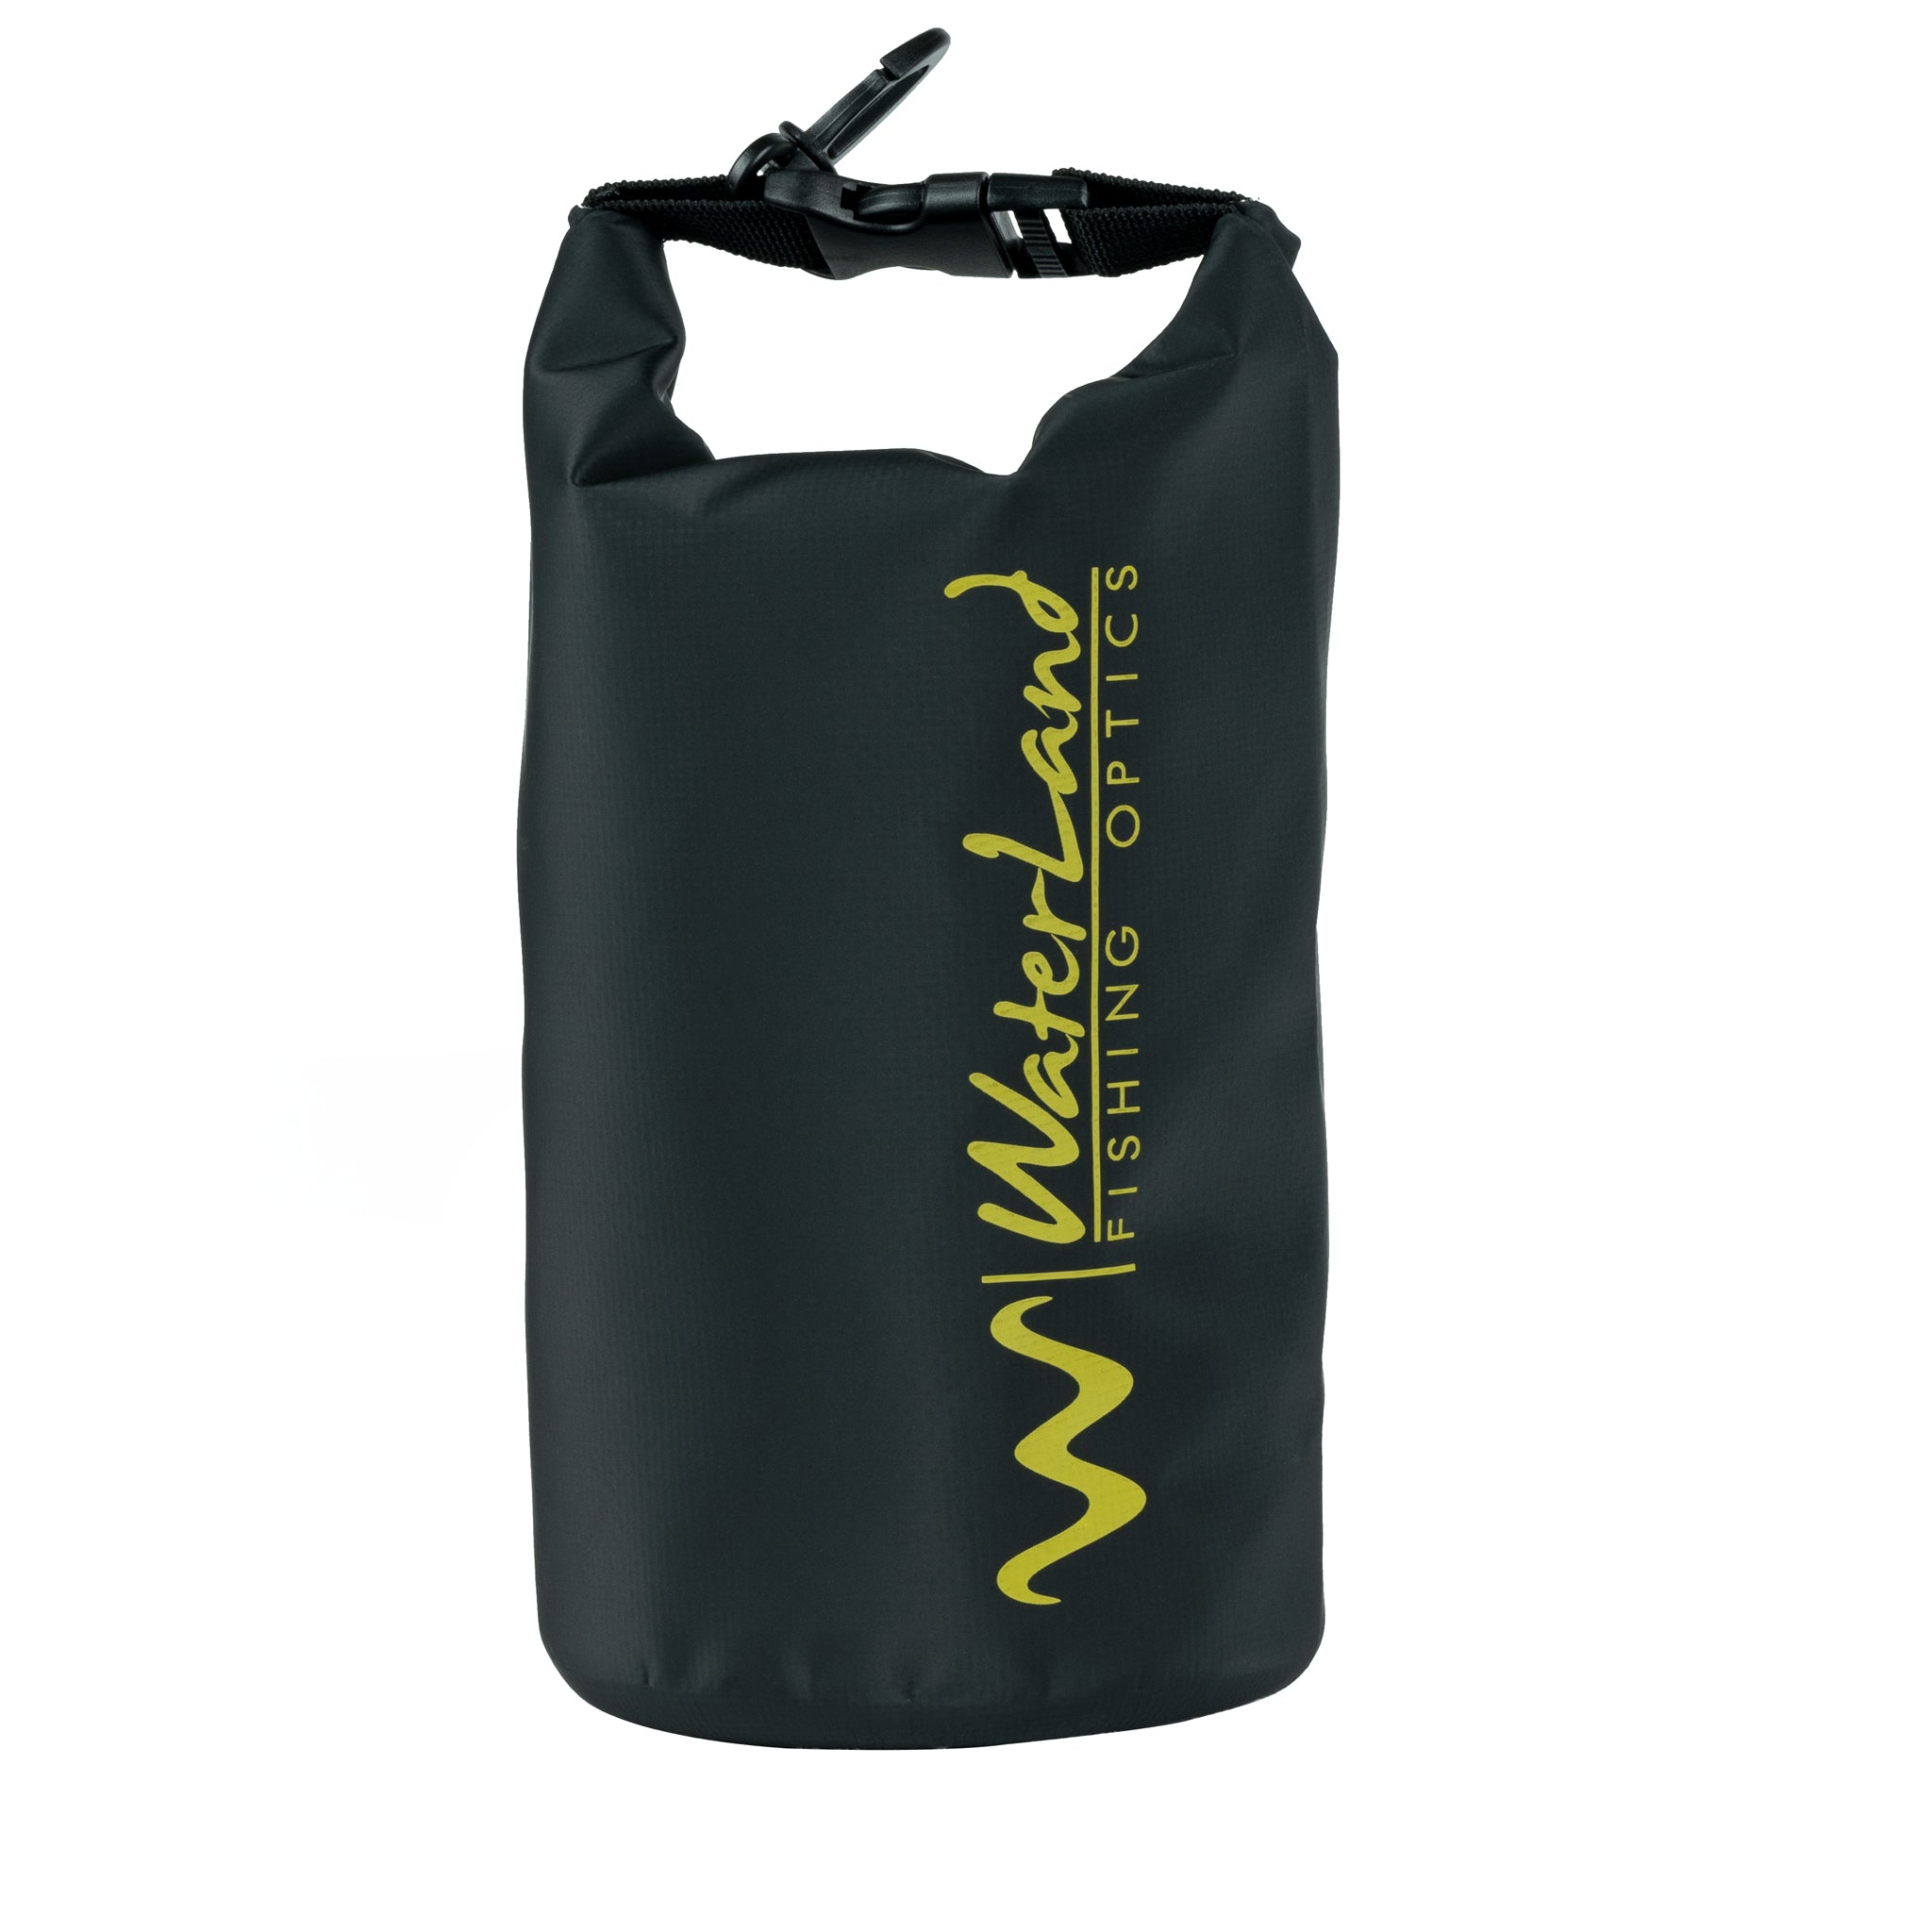 DryLand™ 2 Liter Bag - Small Black